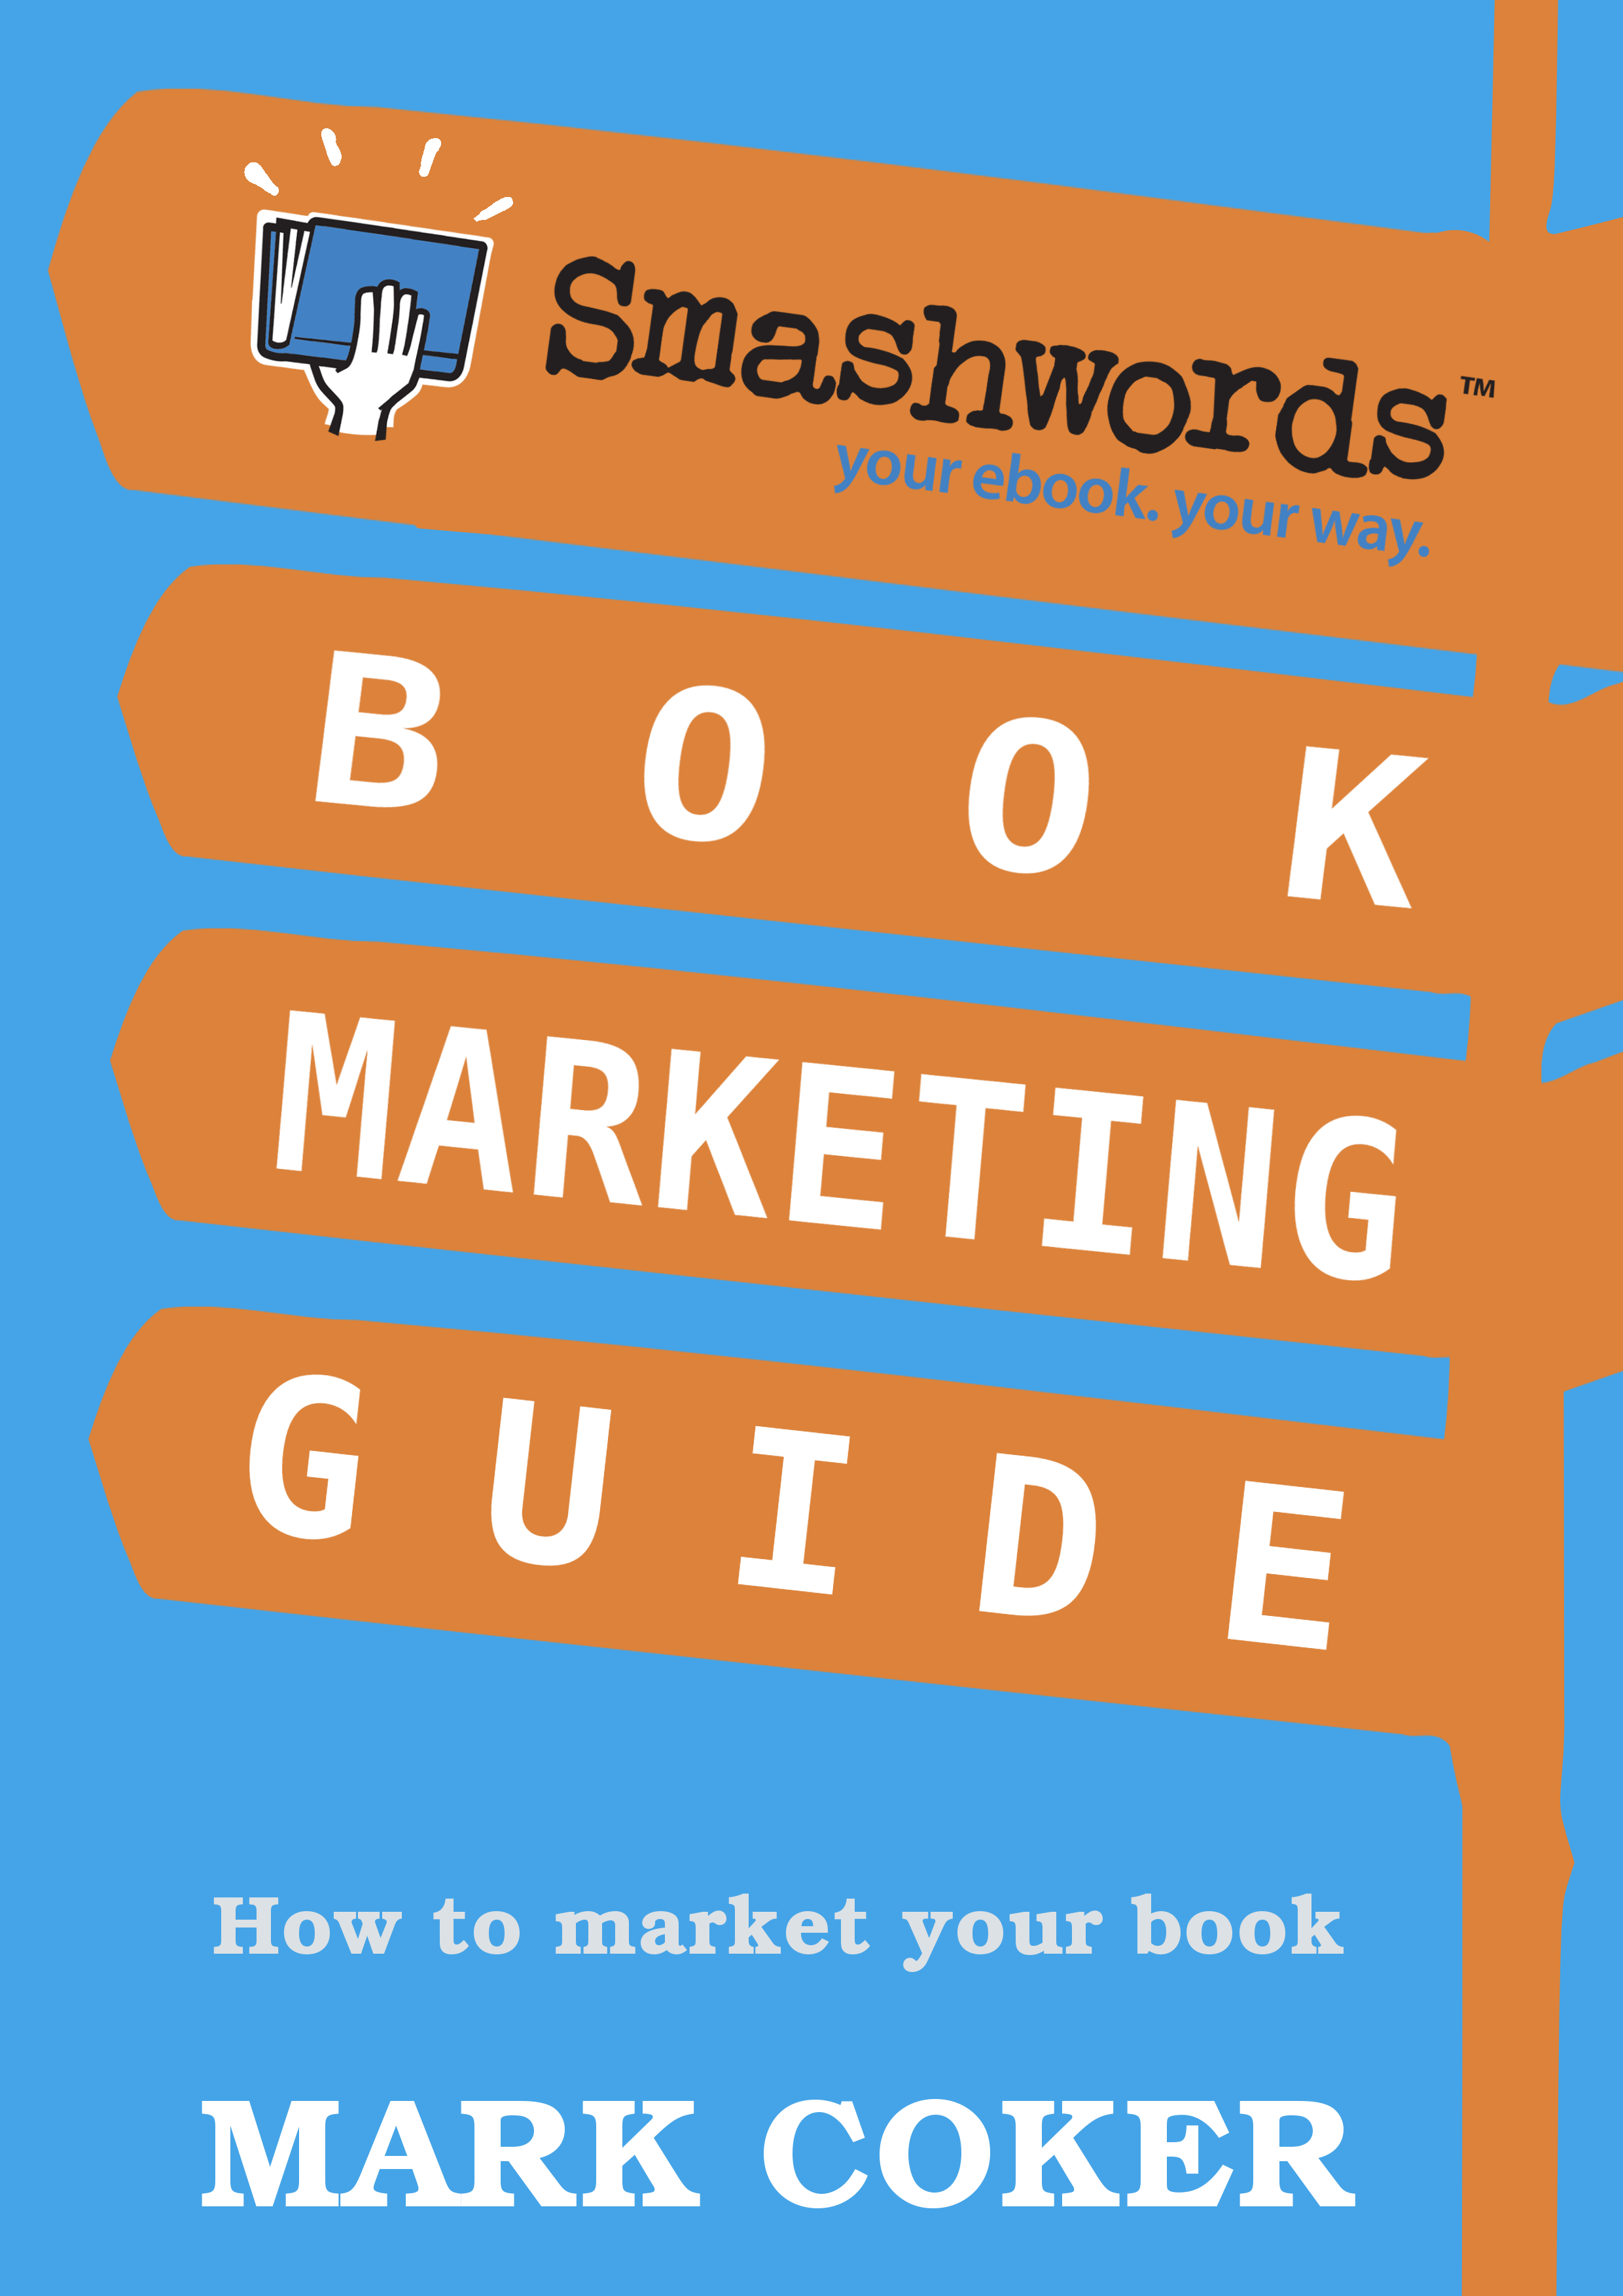 Marketing guide